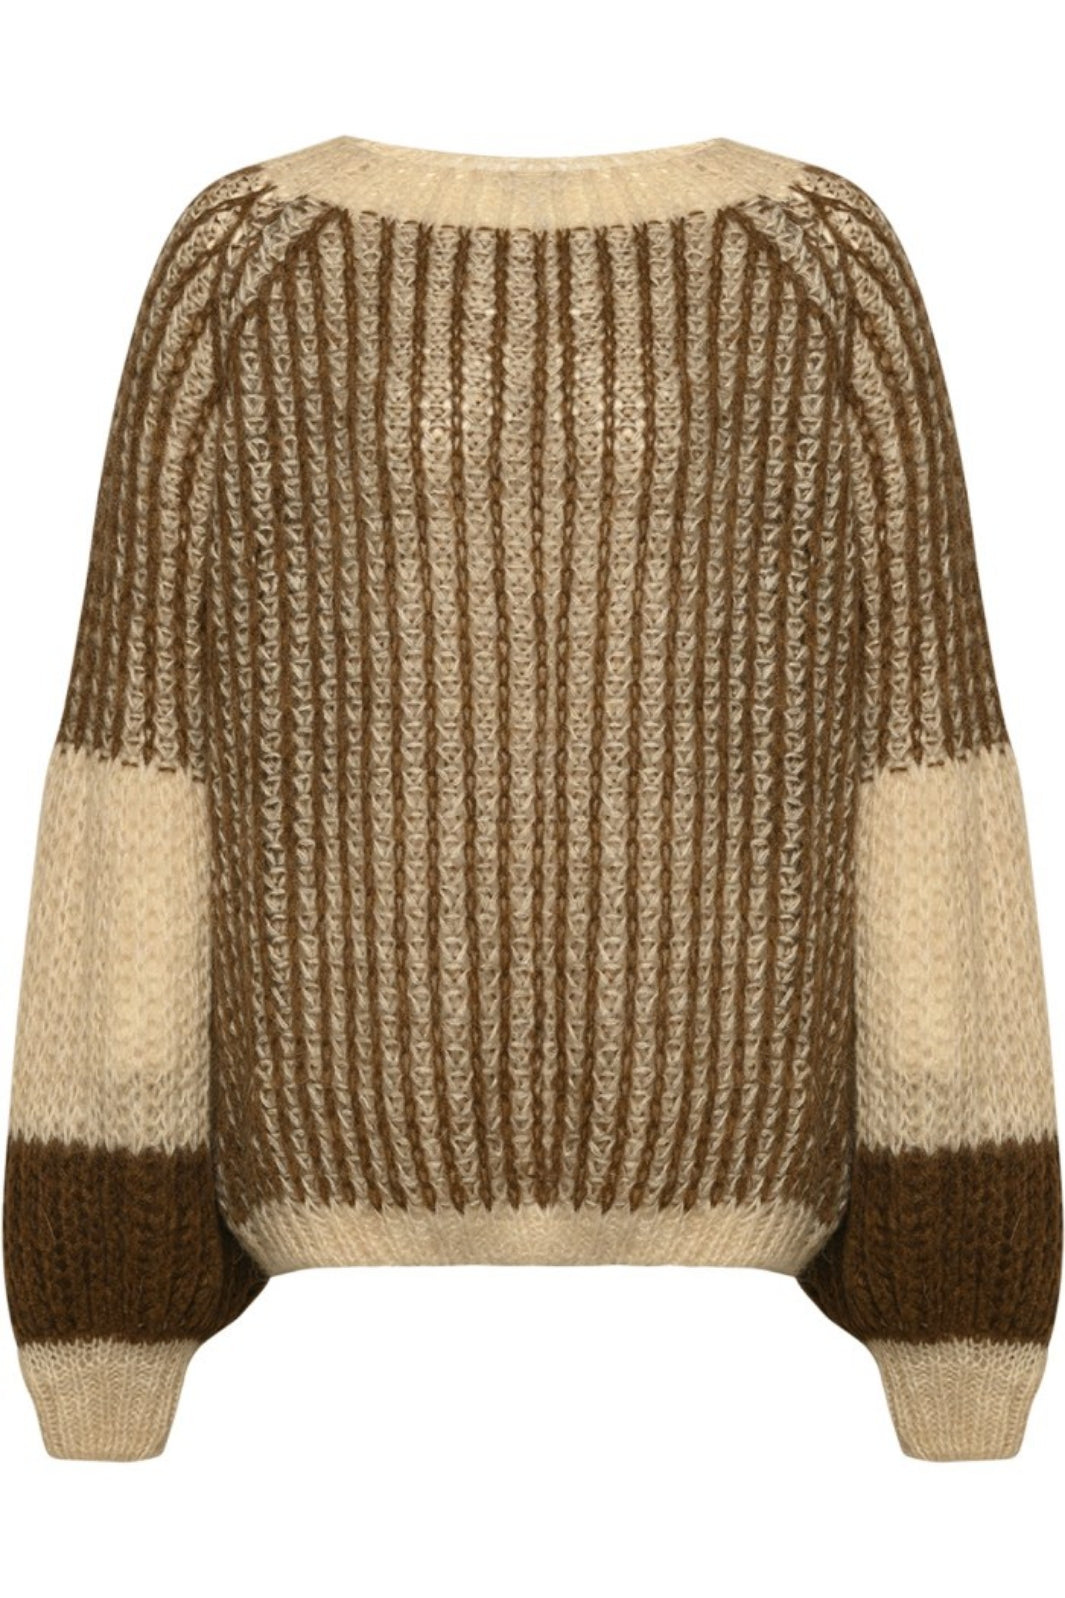 Noella - Liana Knit Sweater - Beige/Brown Strikbluser 